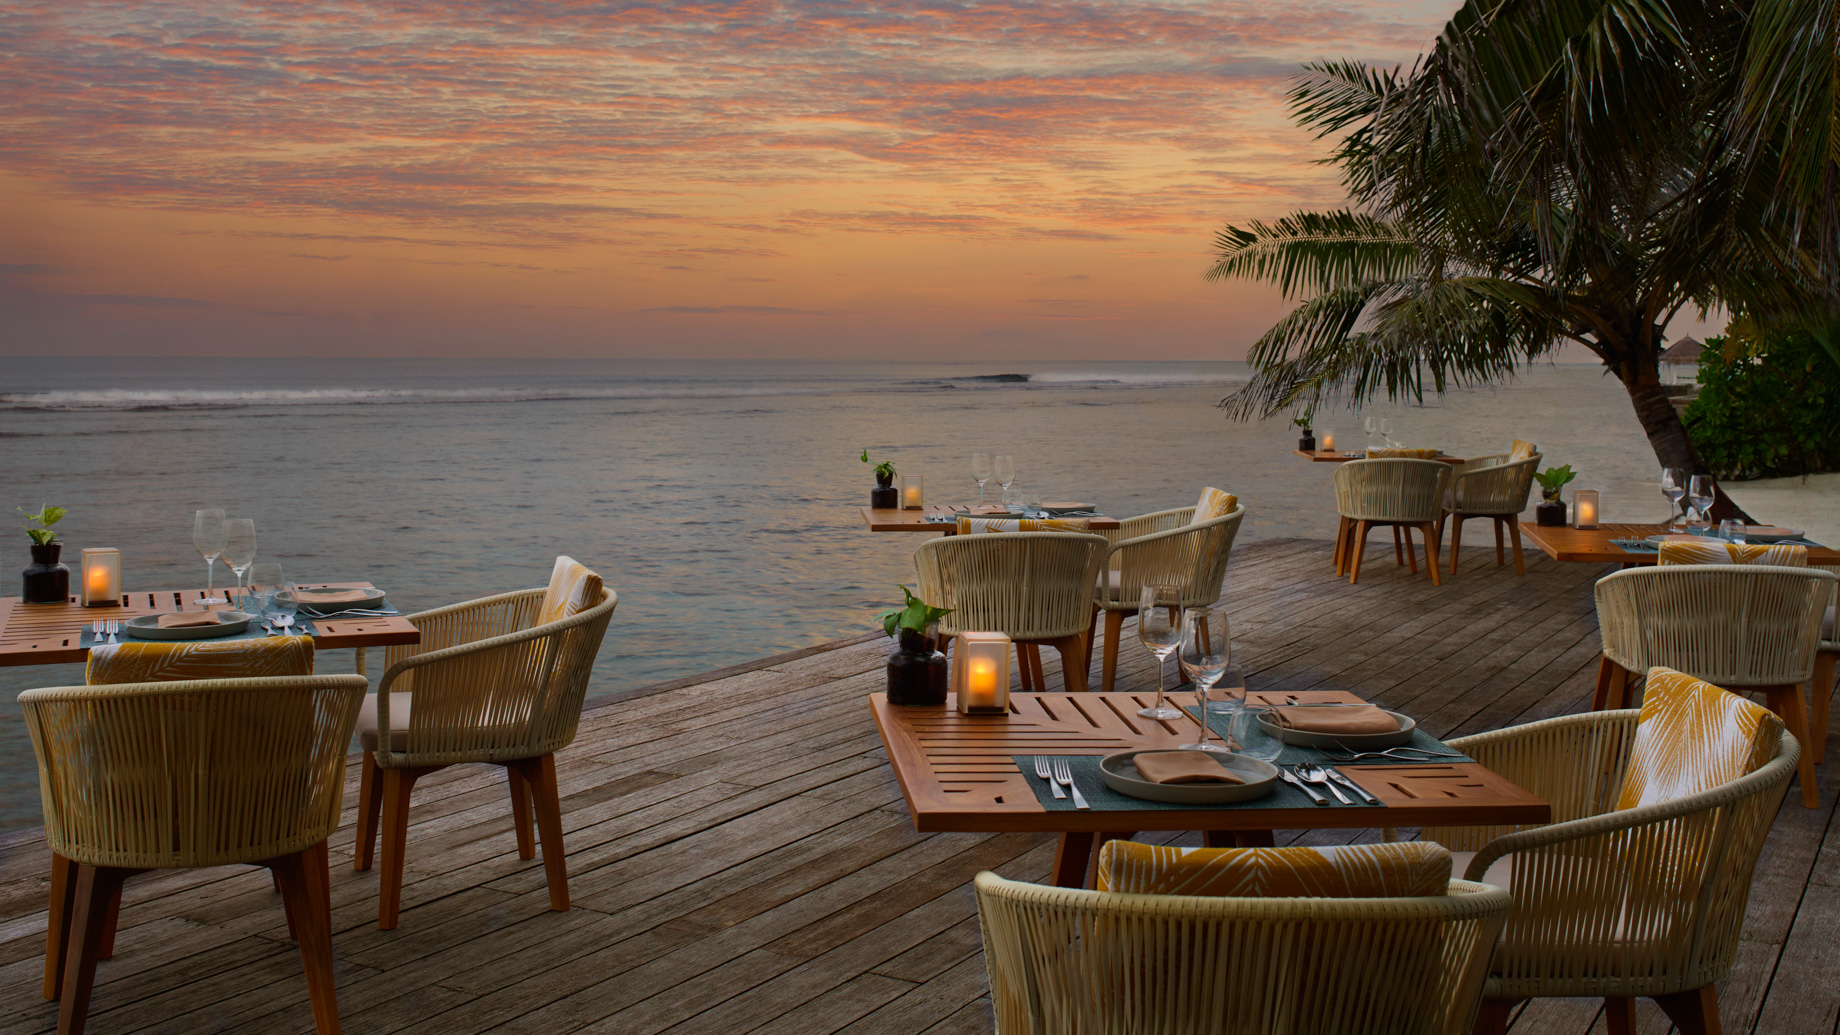 Anantara Veli Maldives Resort - South Male Atoll, Maldives - Cumin Restaurant Oceanfront Deck Sunset Dining